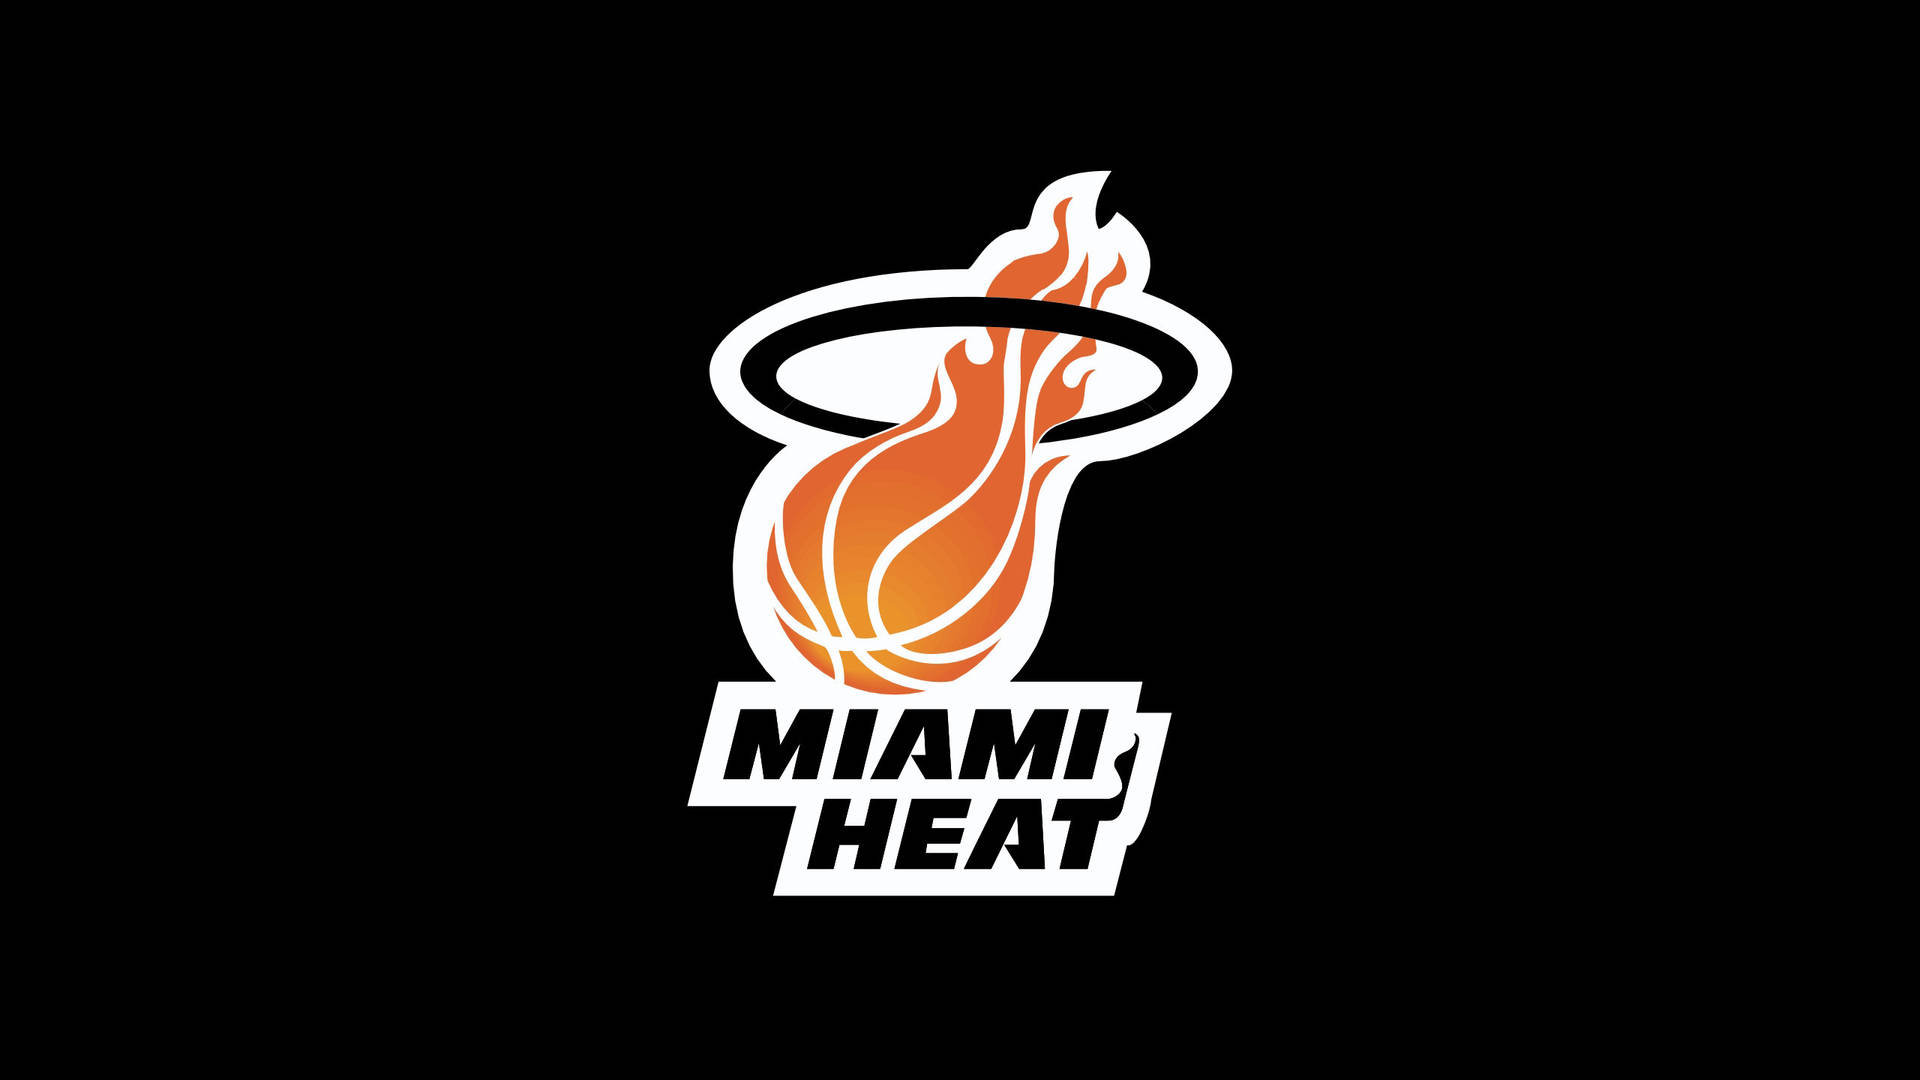 Free Miami Heat Wallpaper Downloads, [200+] Miami Heat Wallpapers for FREE  